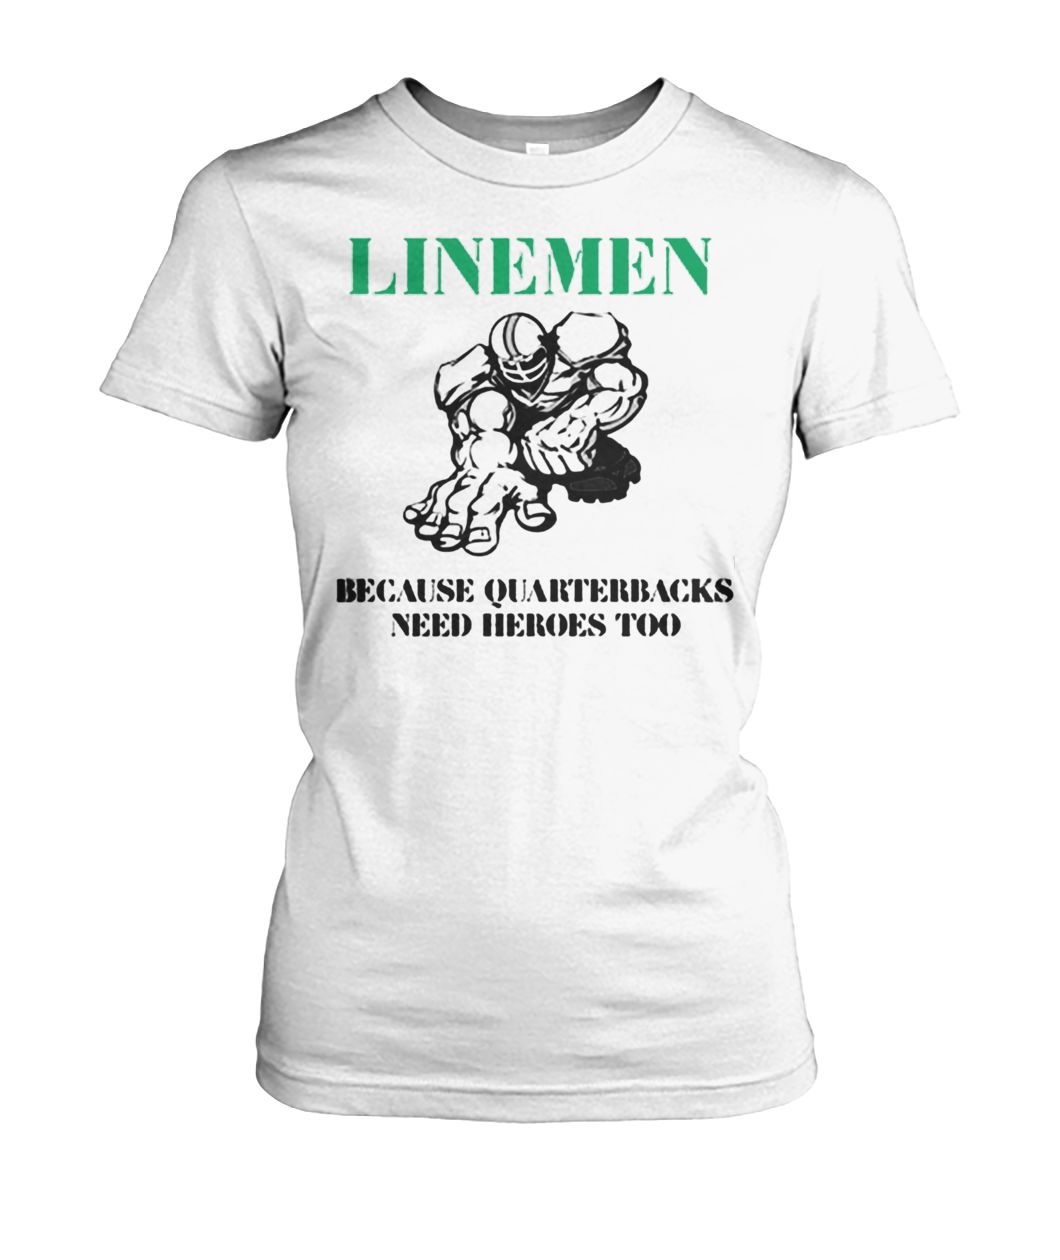 Linemen because quarterbacks need heroes too women's crew tee